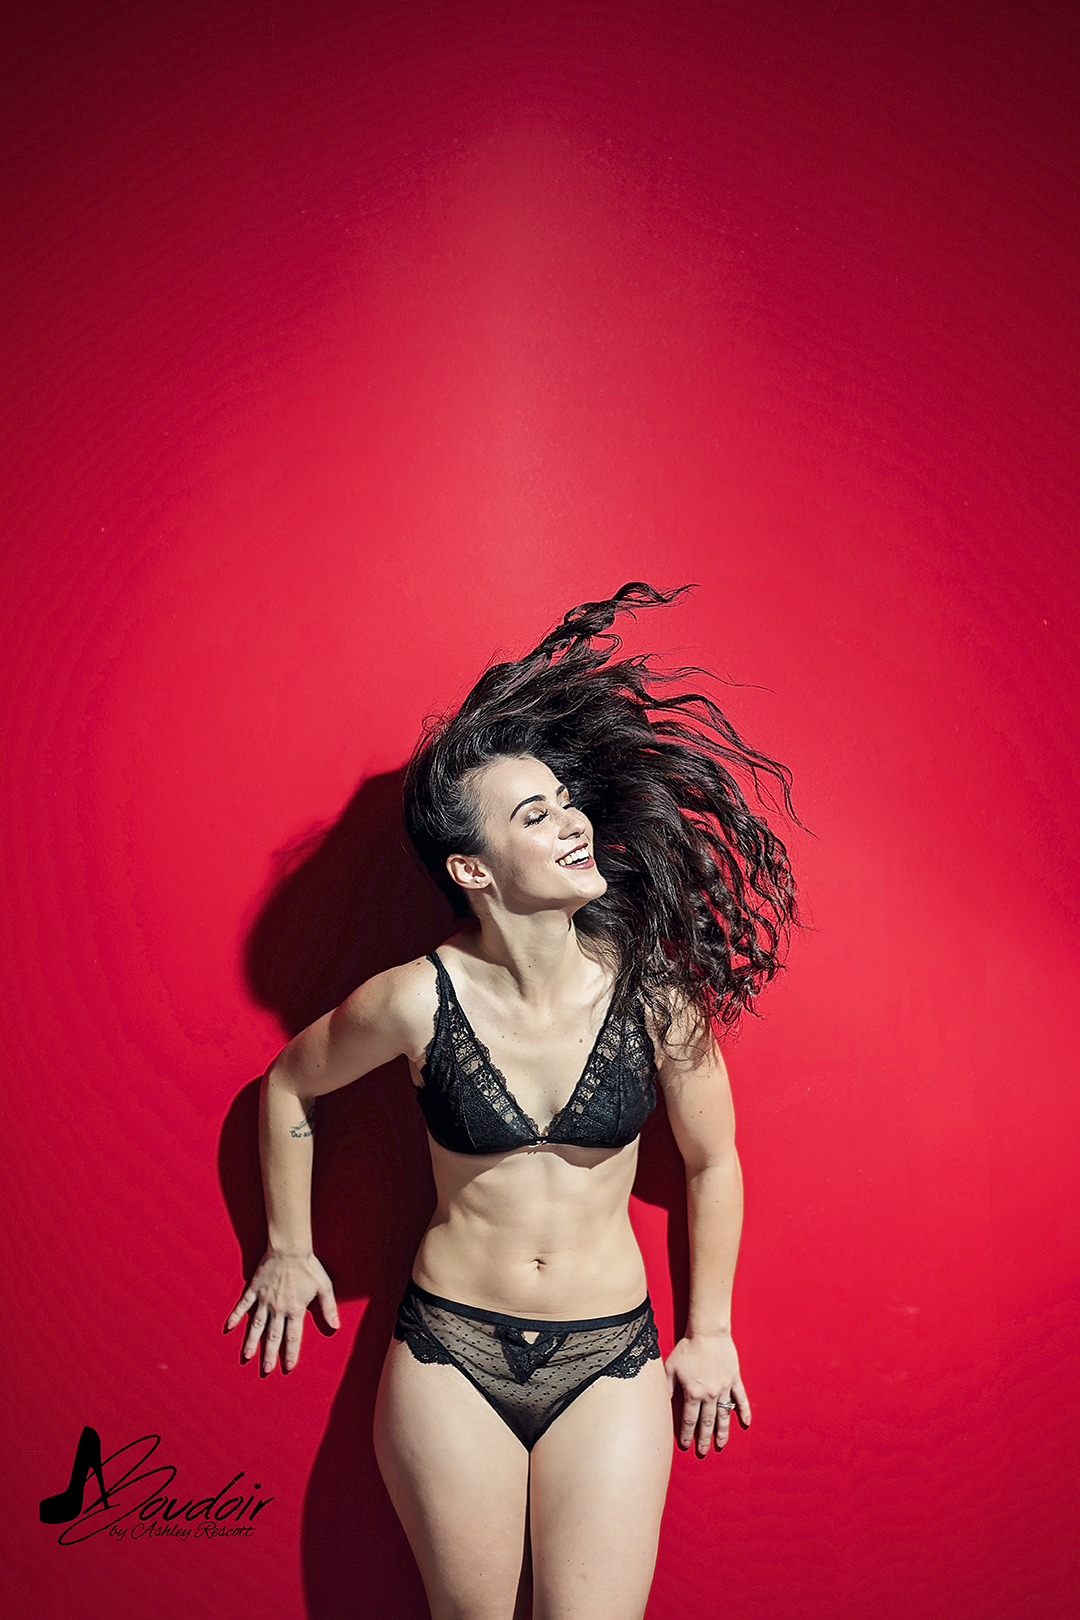 Woman in underwear flipping her brunette hair against a red wall. Hair flip.